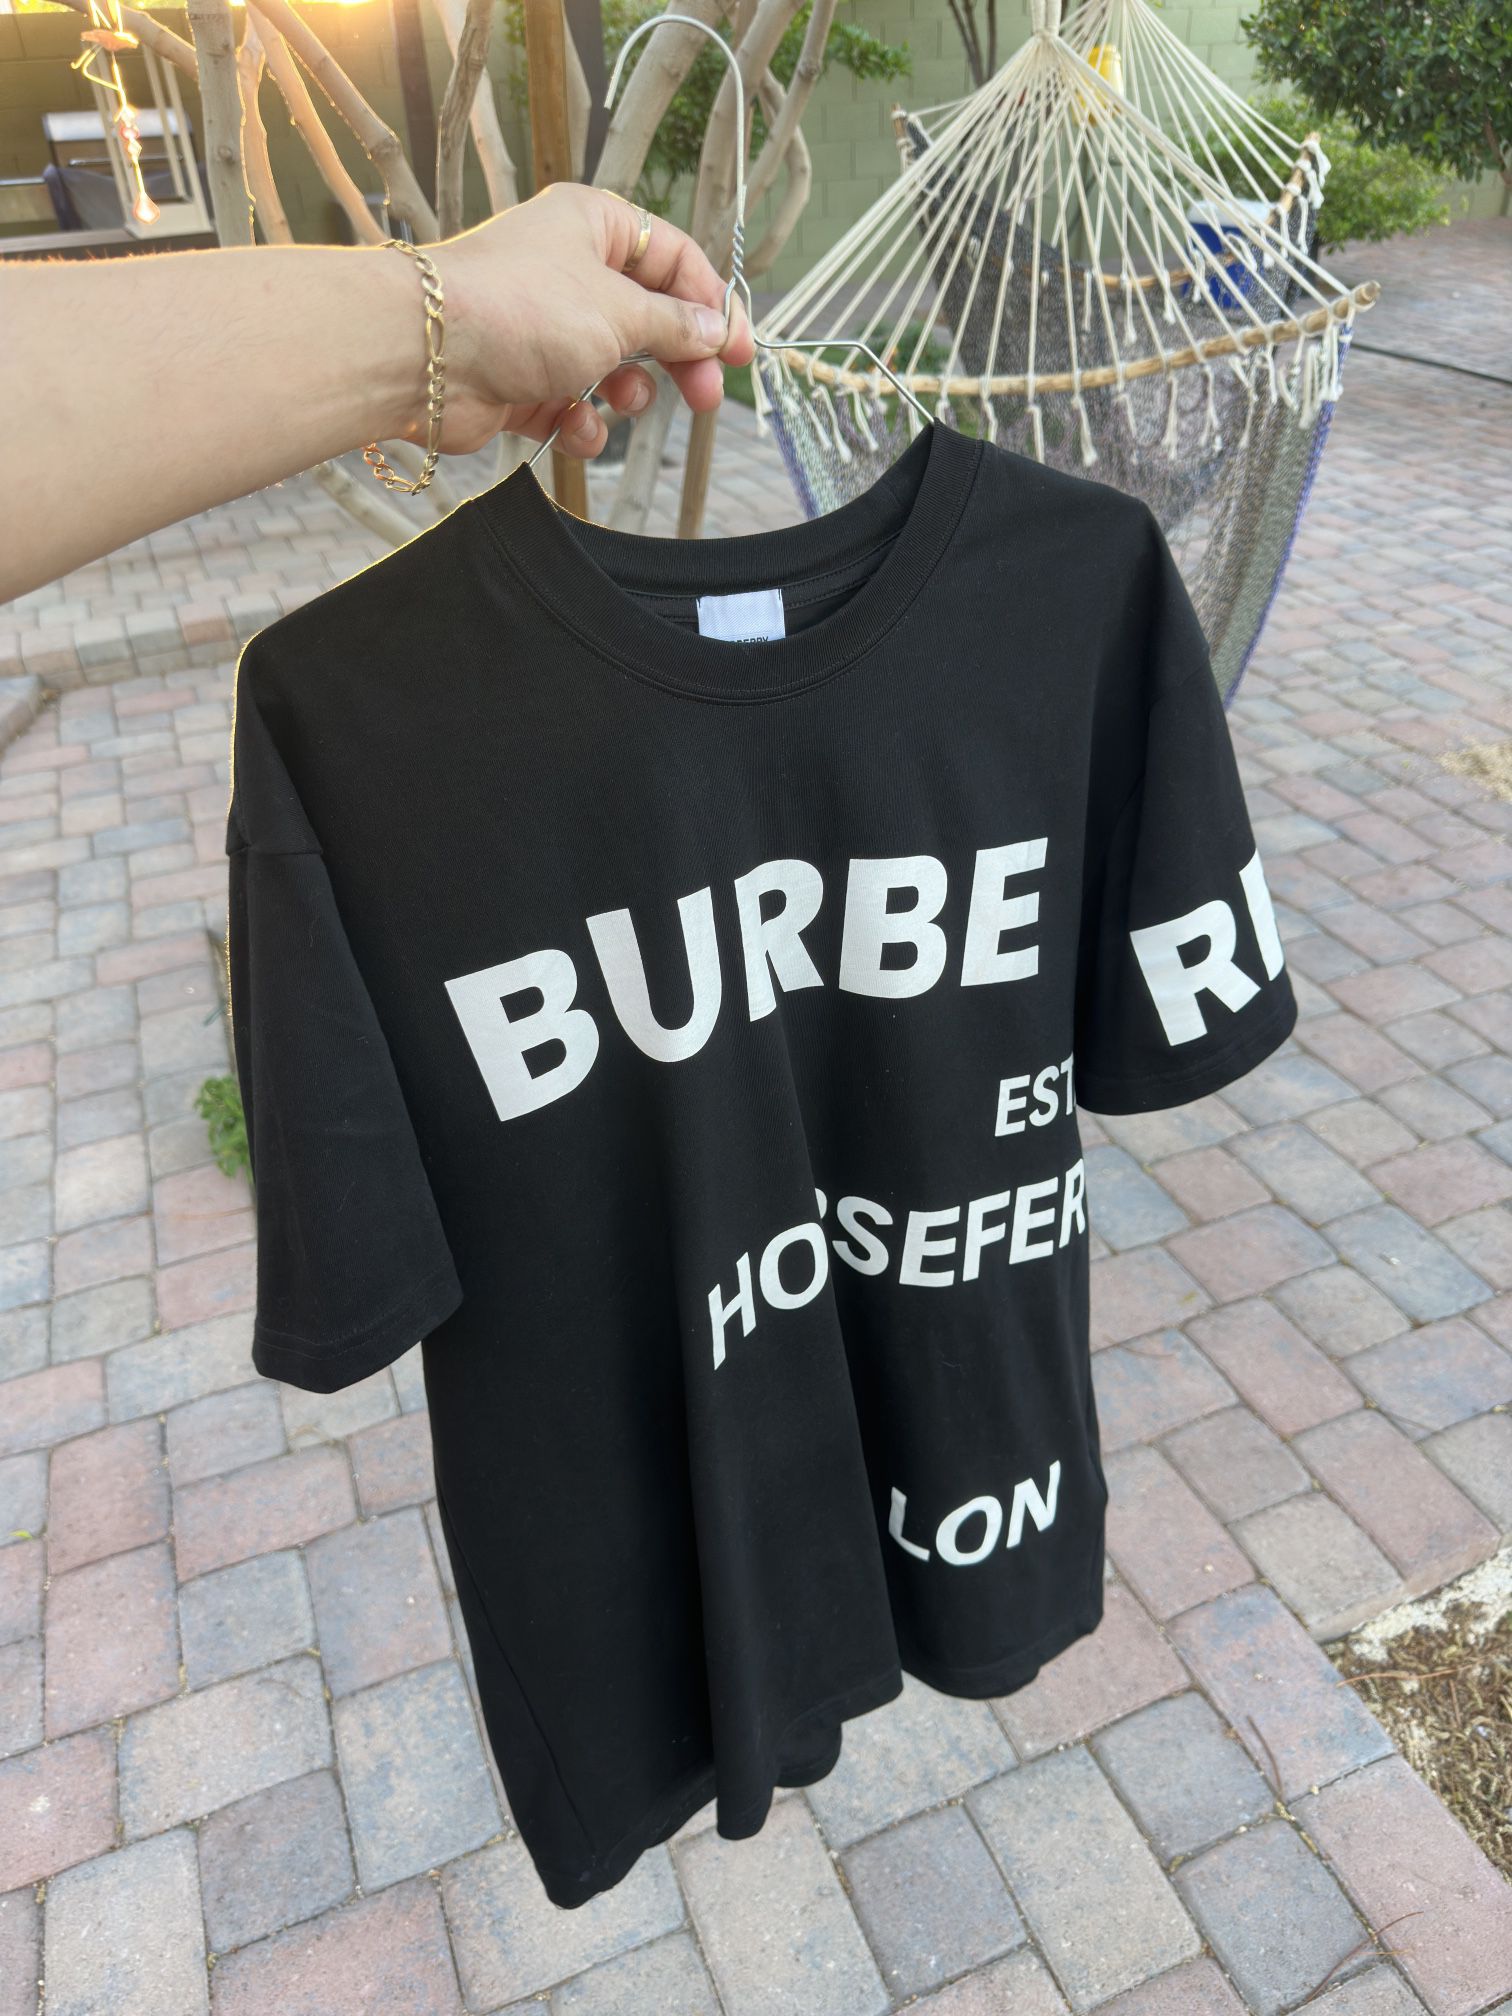 Burberry T Shirt 